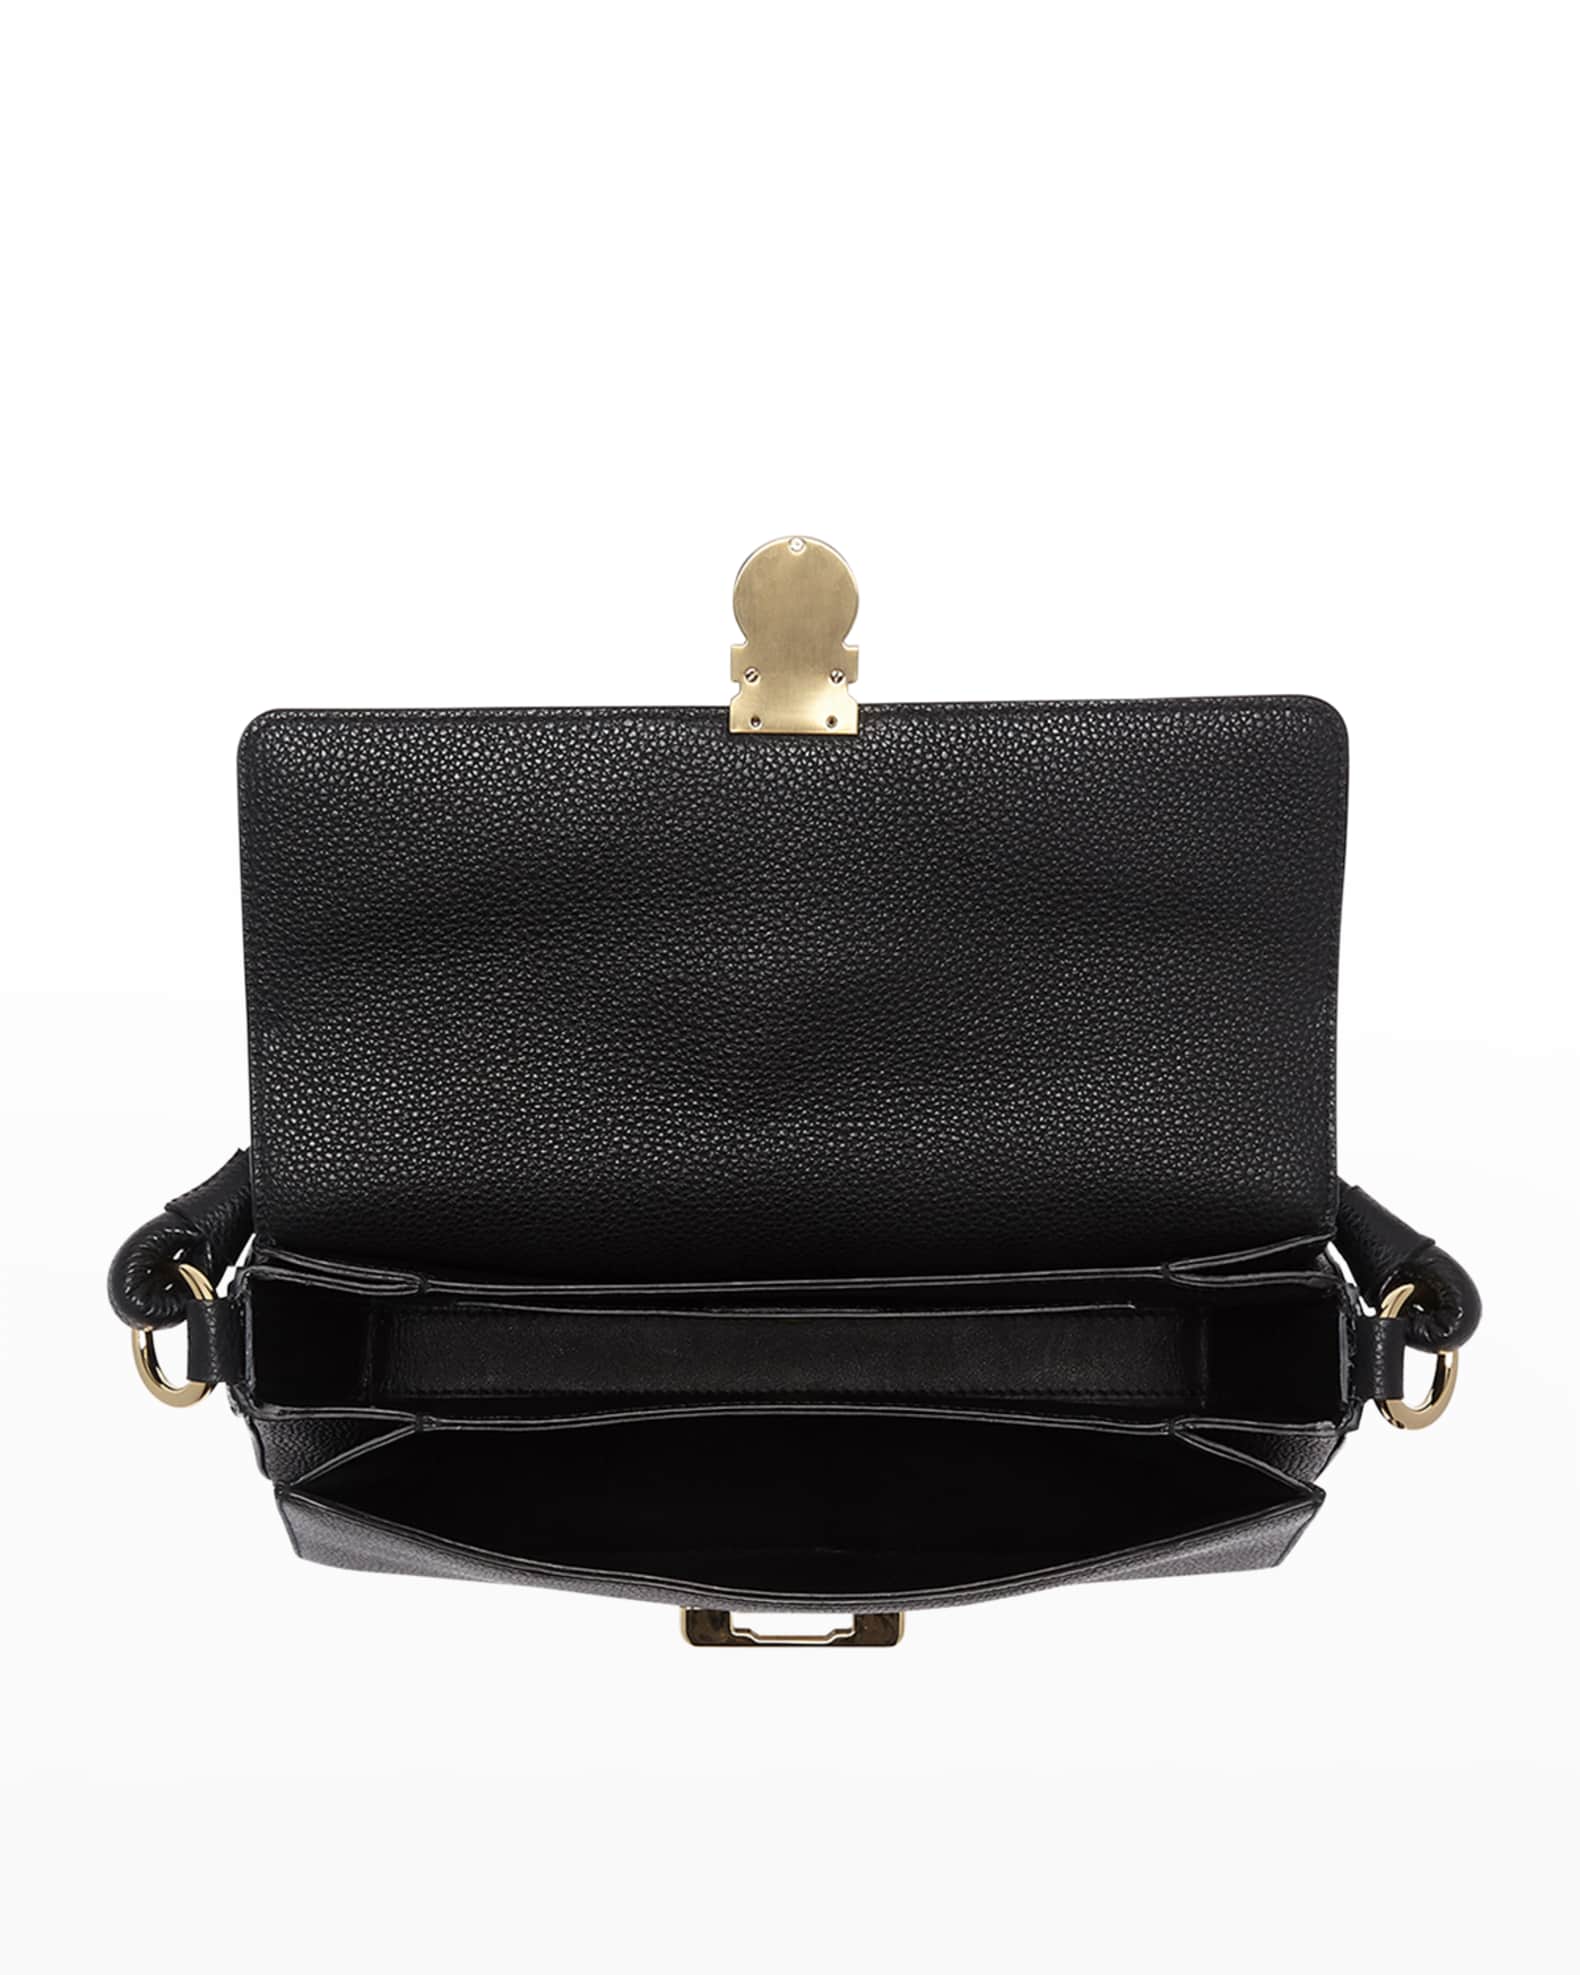 Salvatore Ferragamo Glam Gancio Leather Shoulder Bag | Neiman Marcus